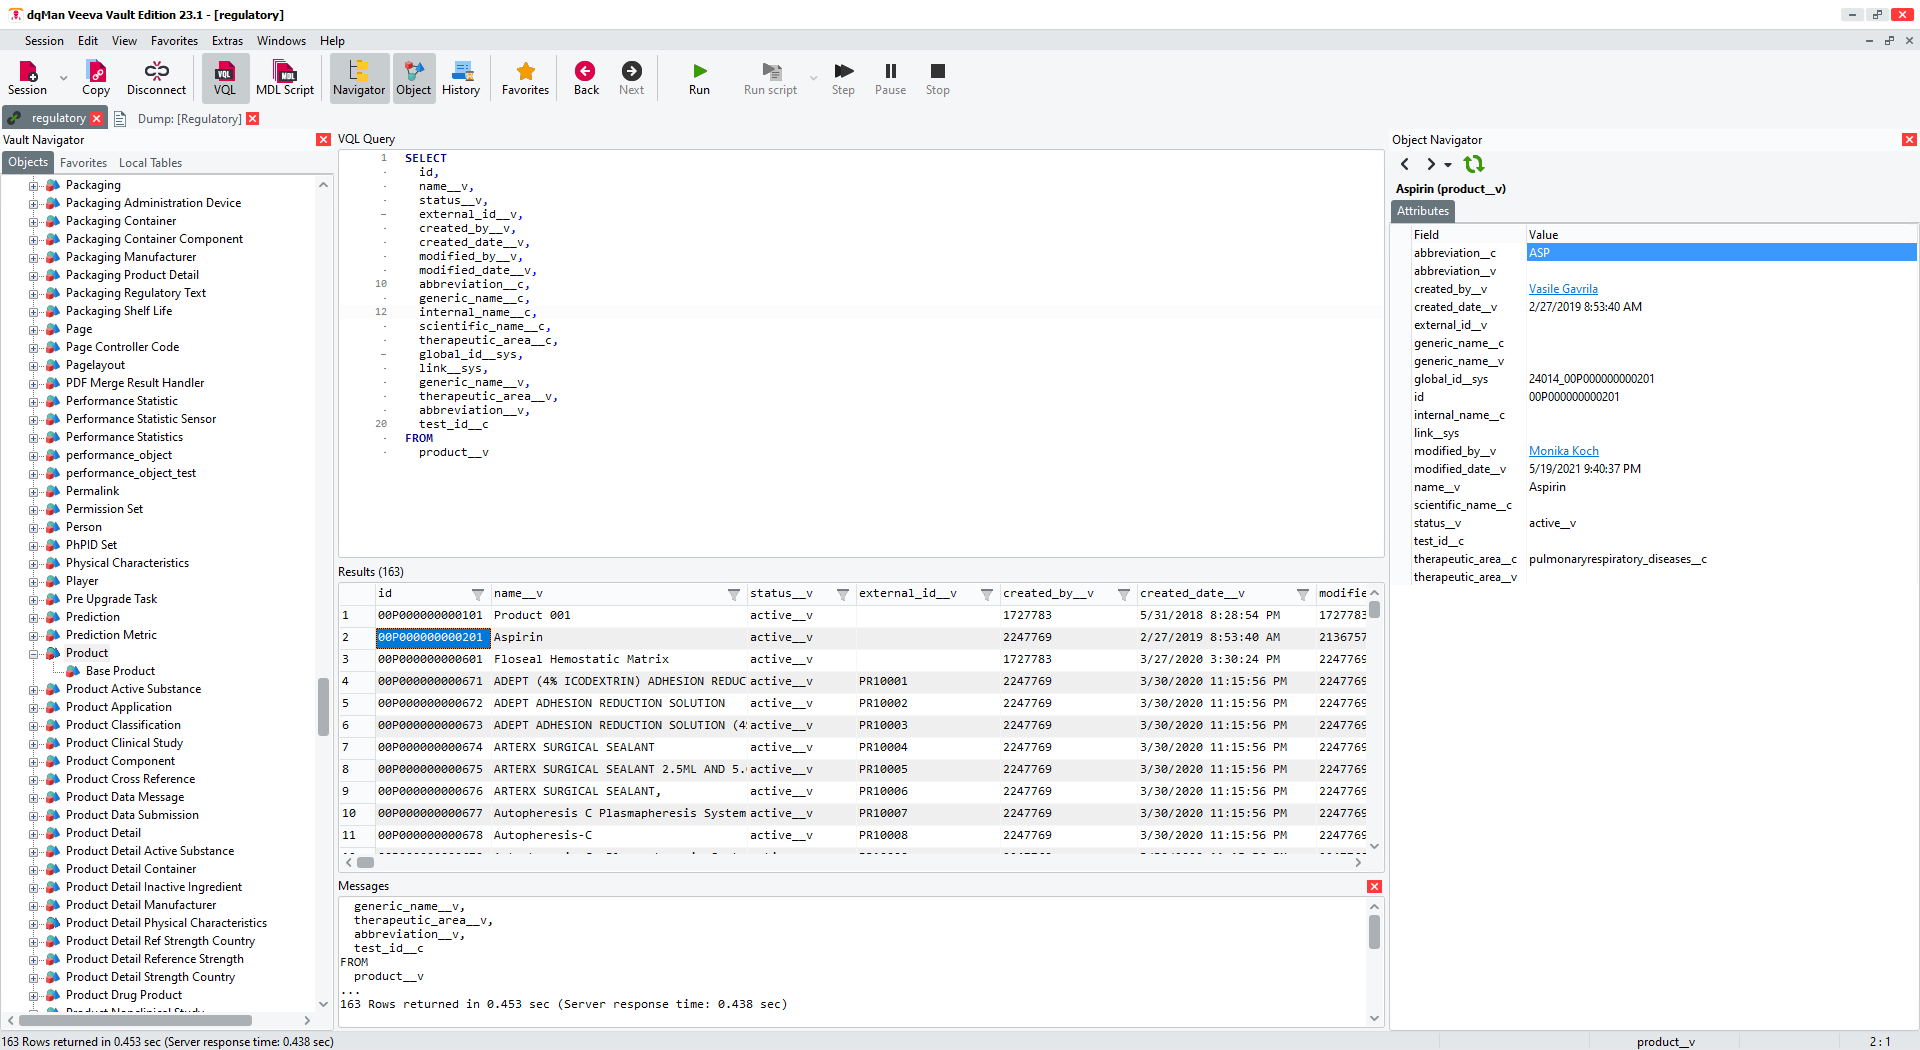 Screenshot | dqMan version to administer Veeva applications | 01